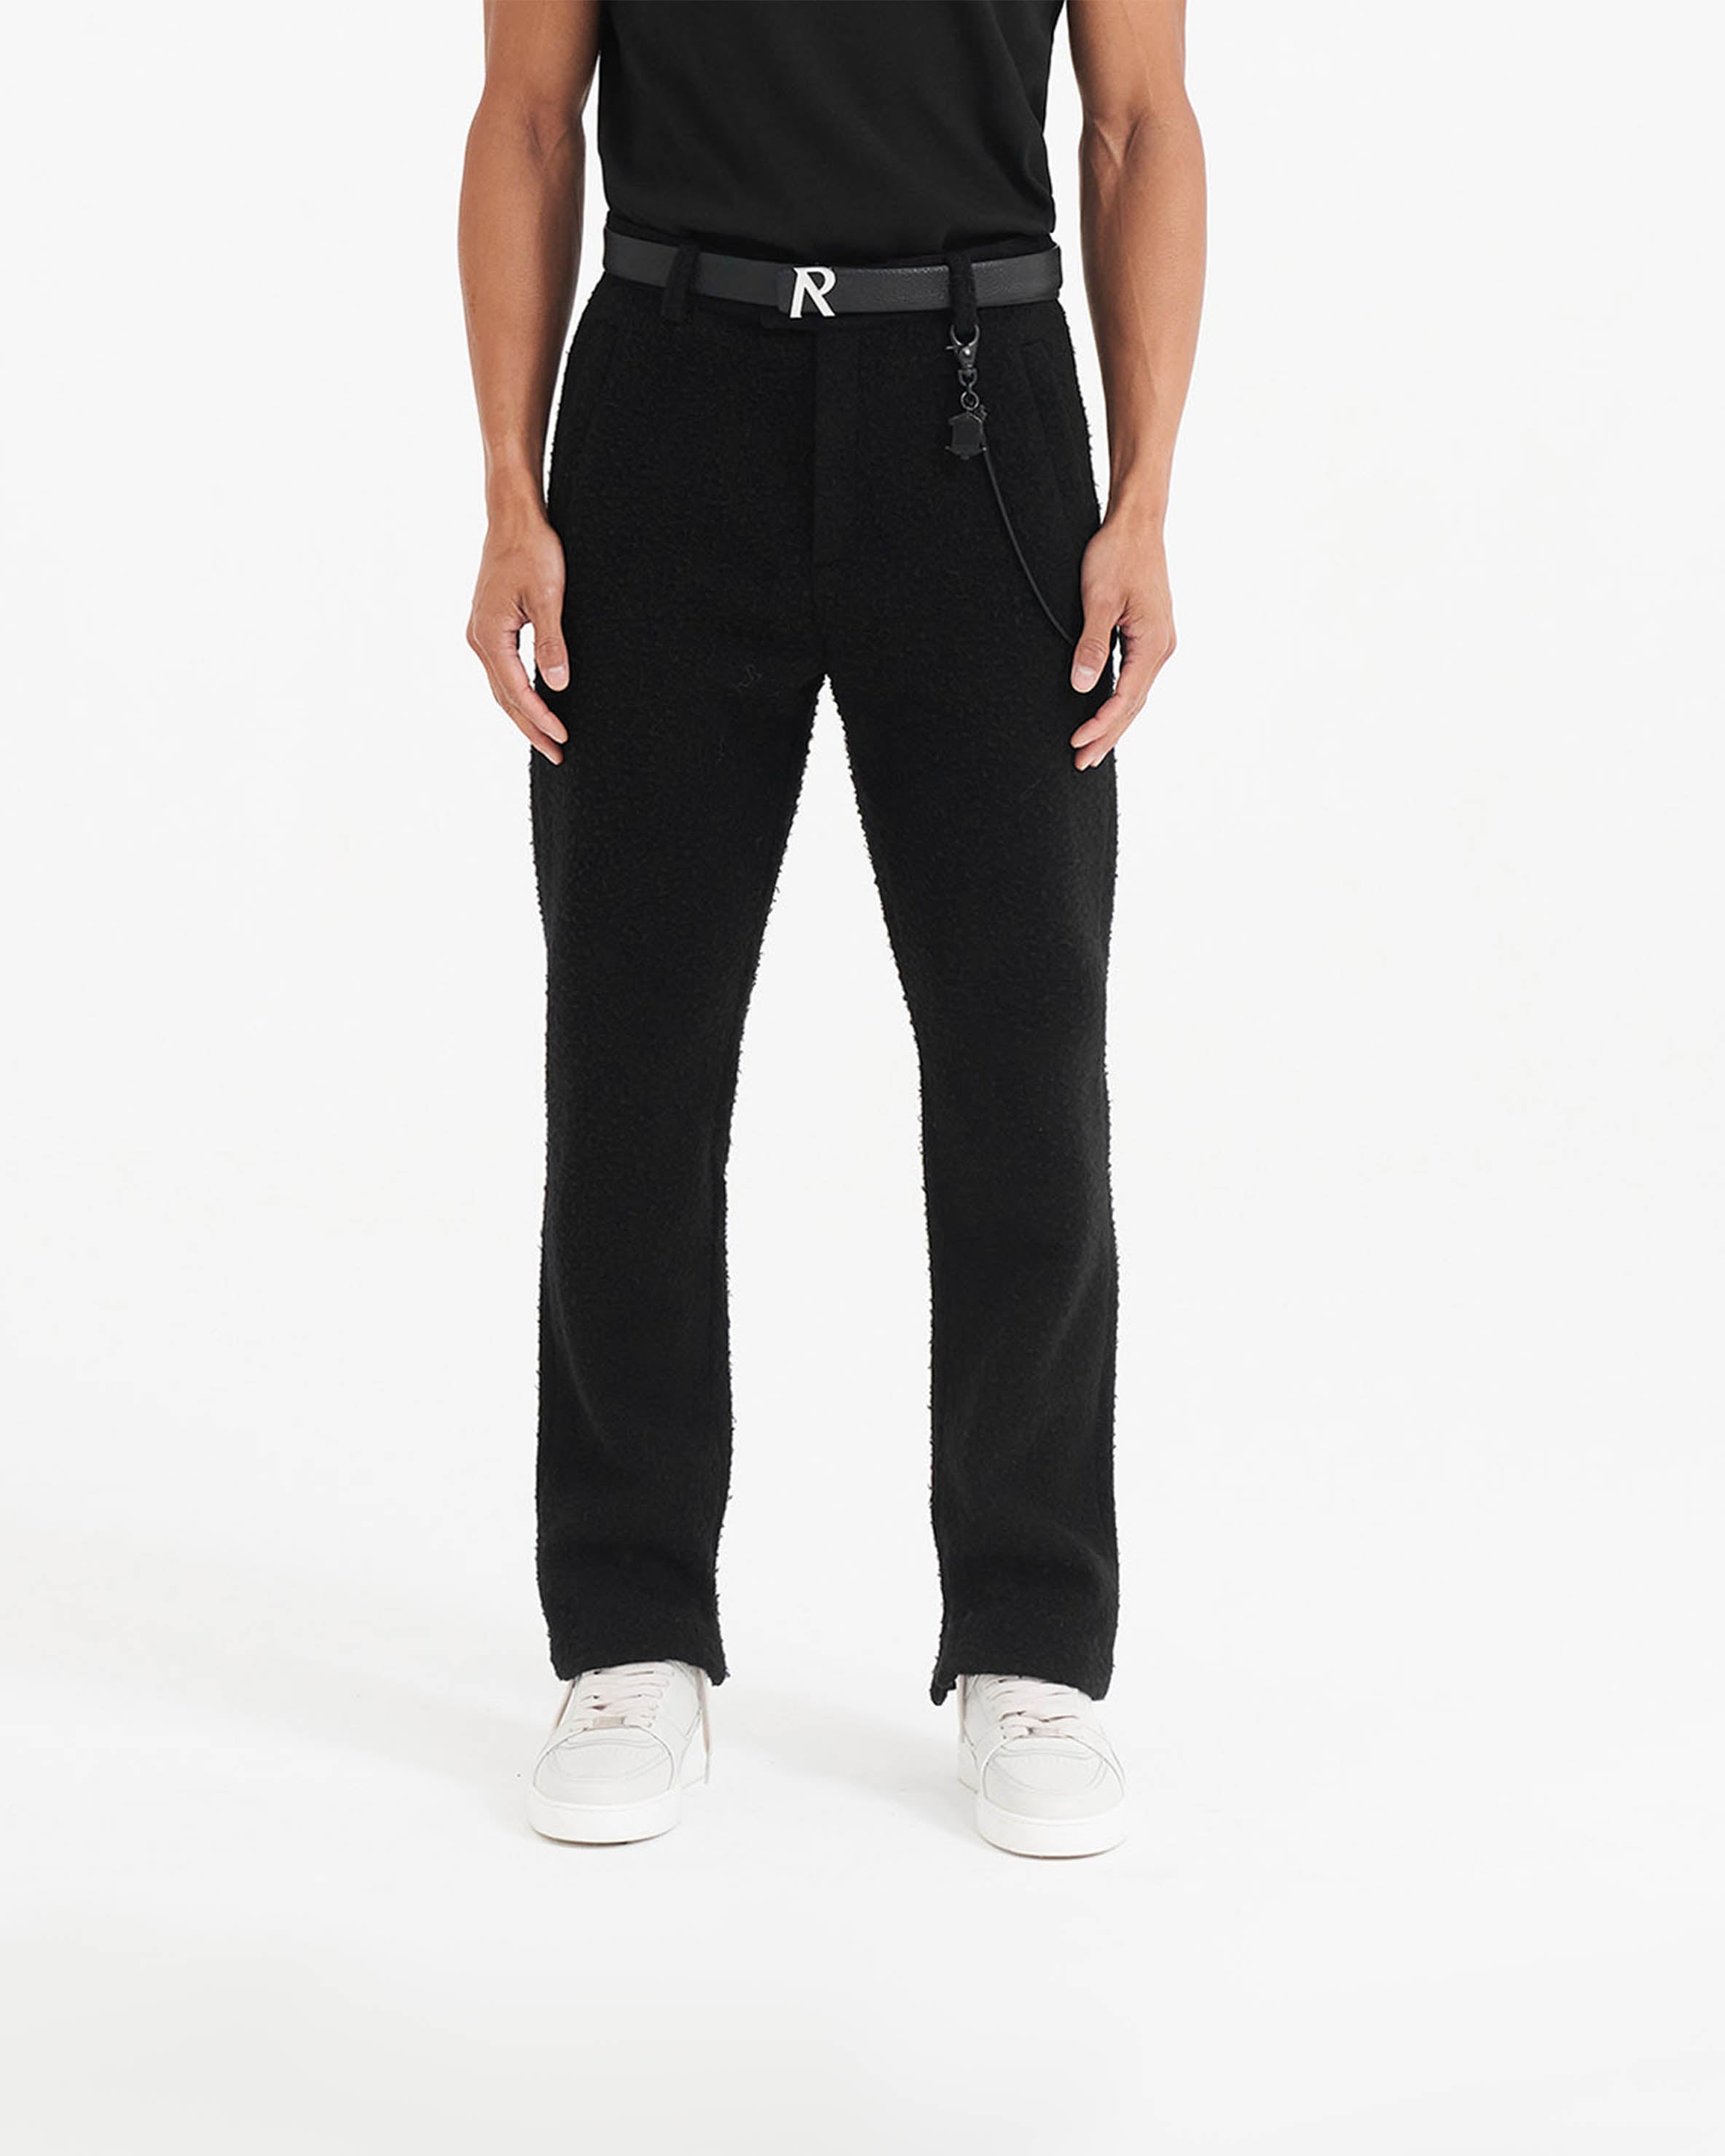 Napoli Slim Fit Black Textured Flat Front Wool Dress Pants | The Suit Depot